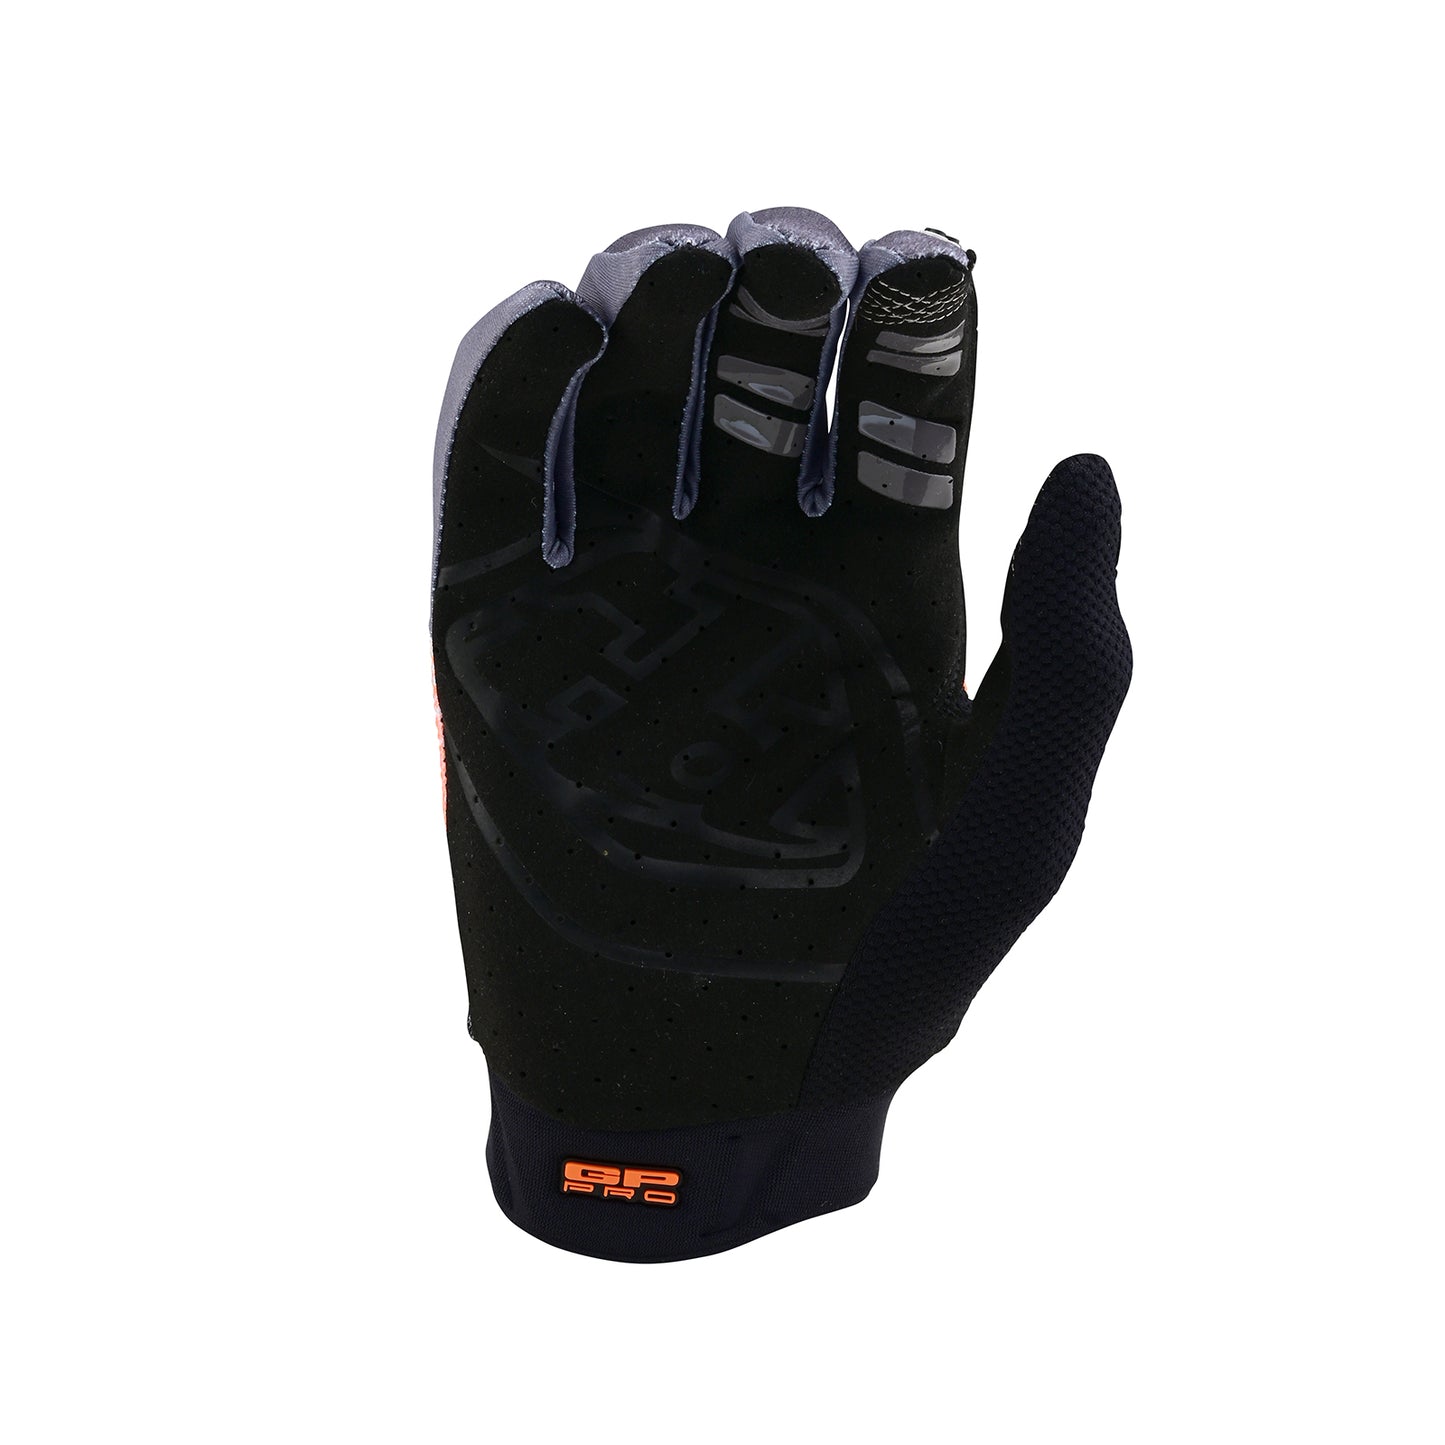 GP Pro Glove Bands Neo Orange / Gray